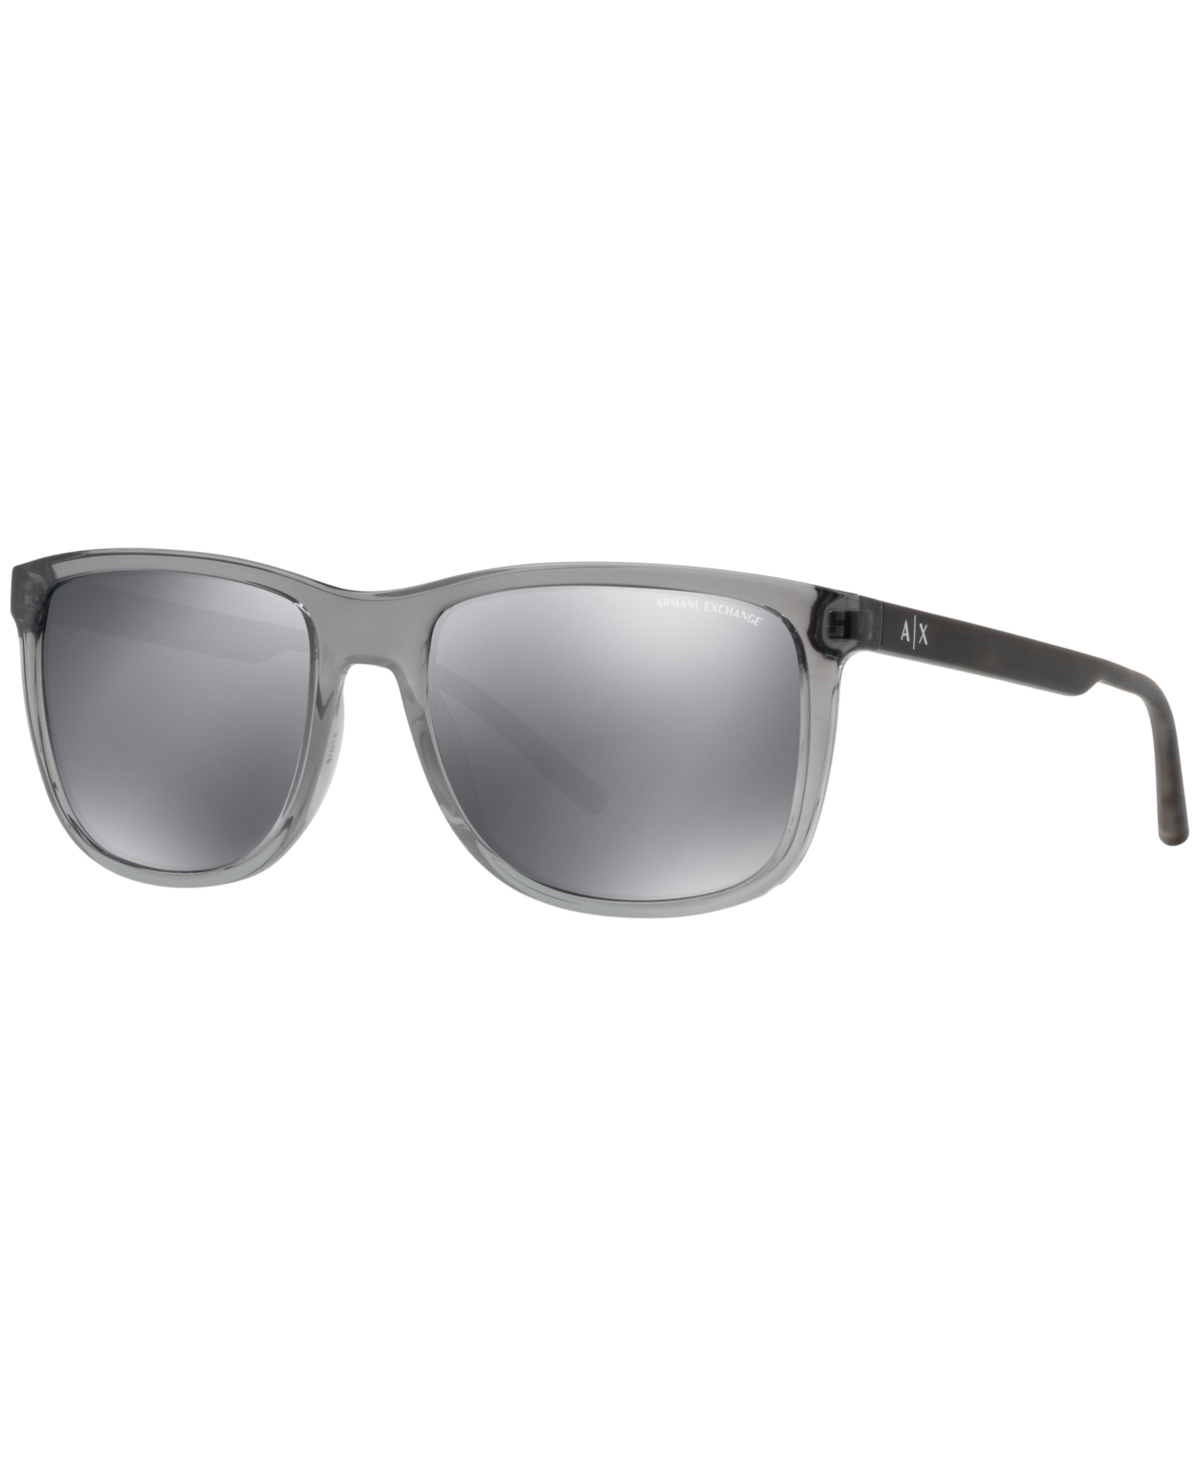 Ax Armani Exchange A|x Sunglasses, Ax4070s In Grey,black Mirror